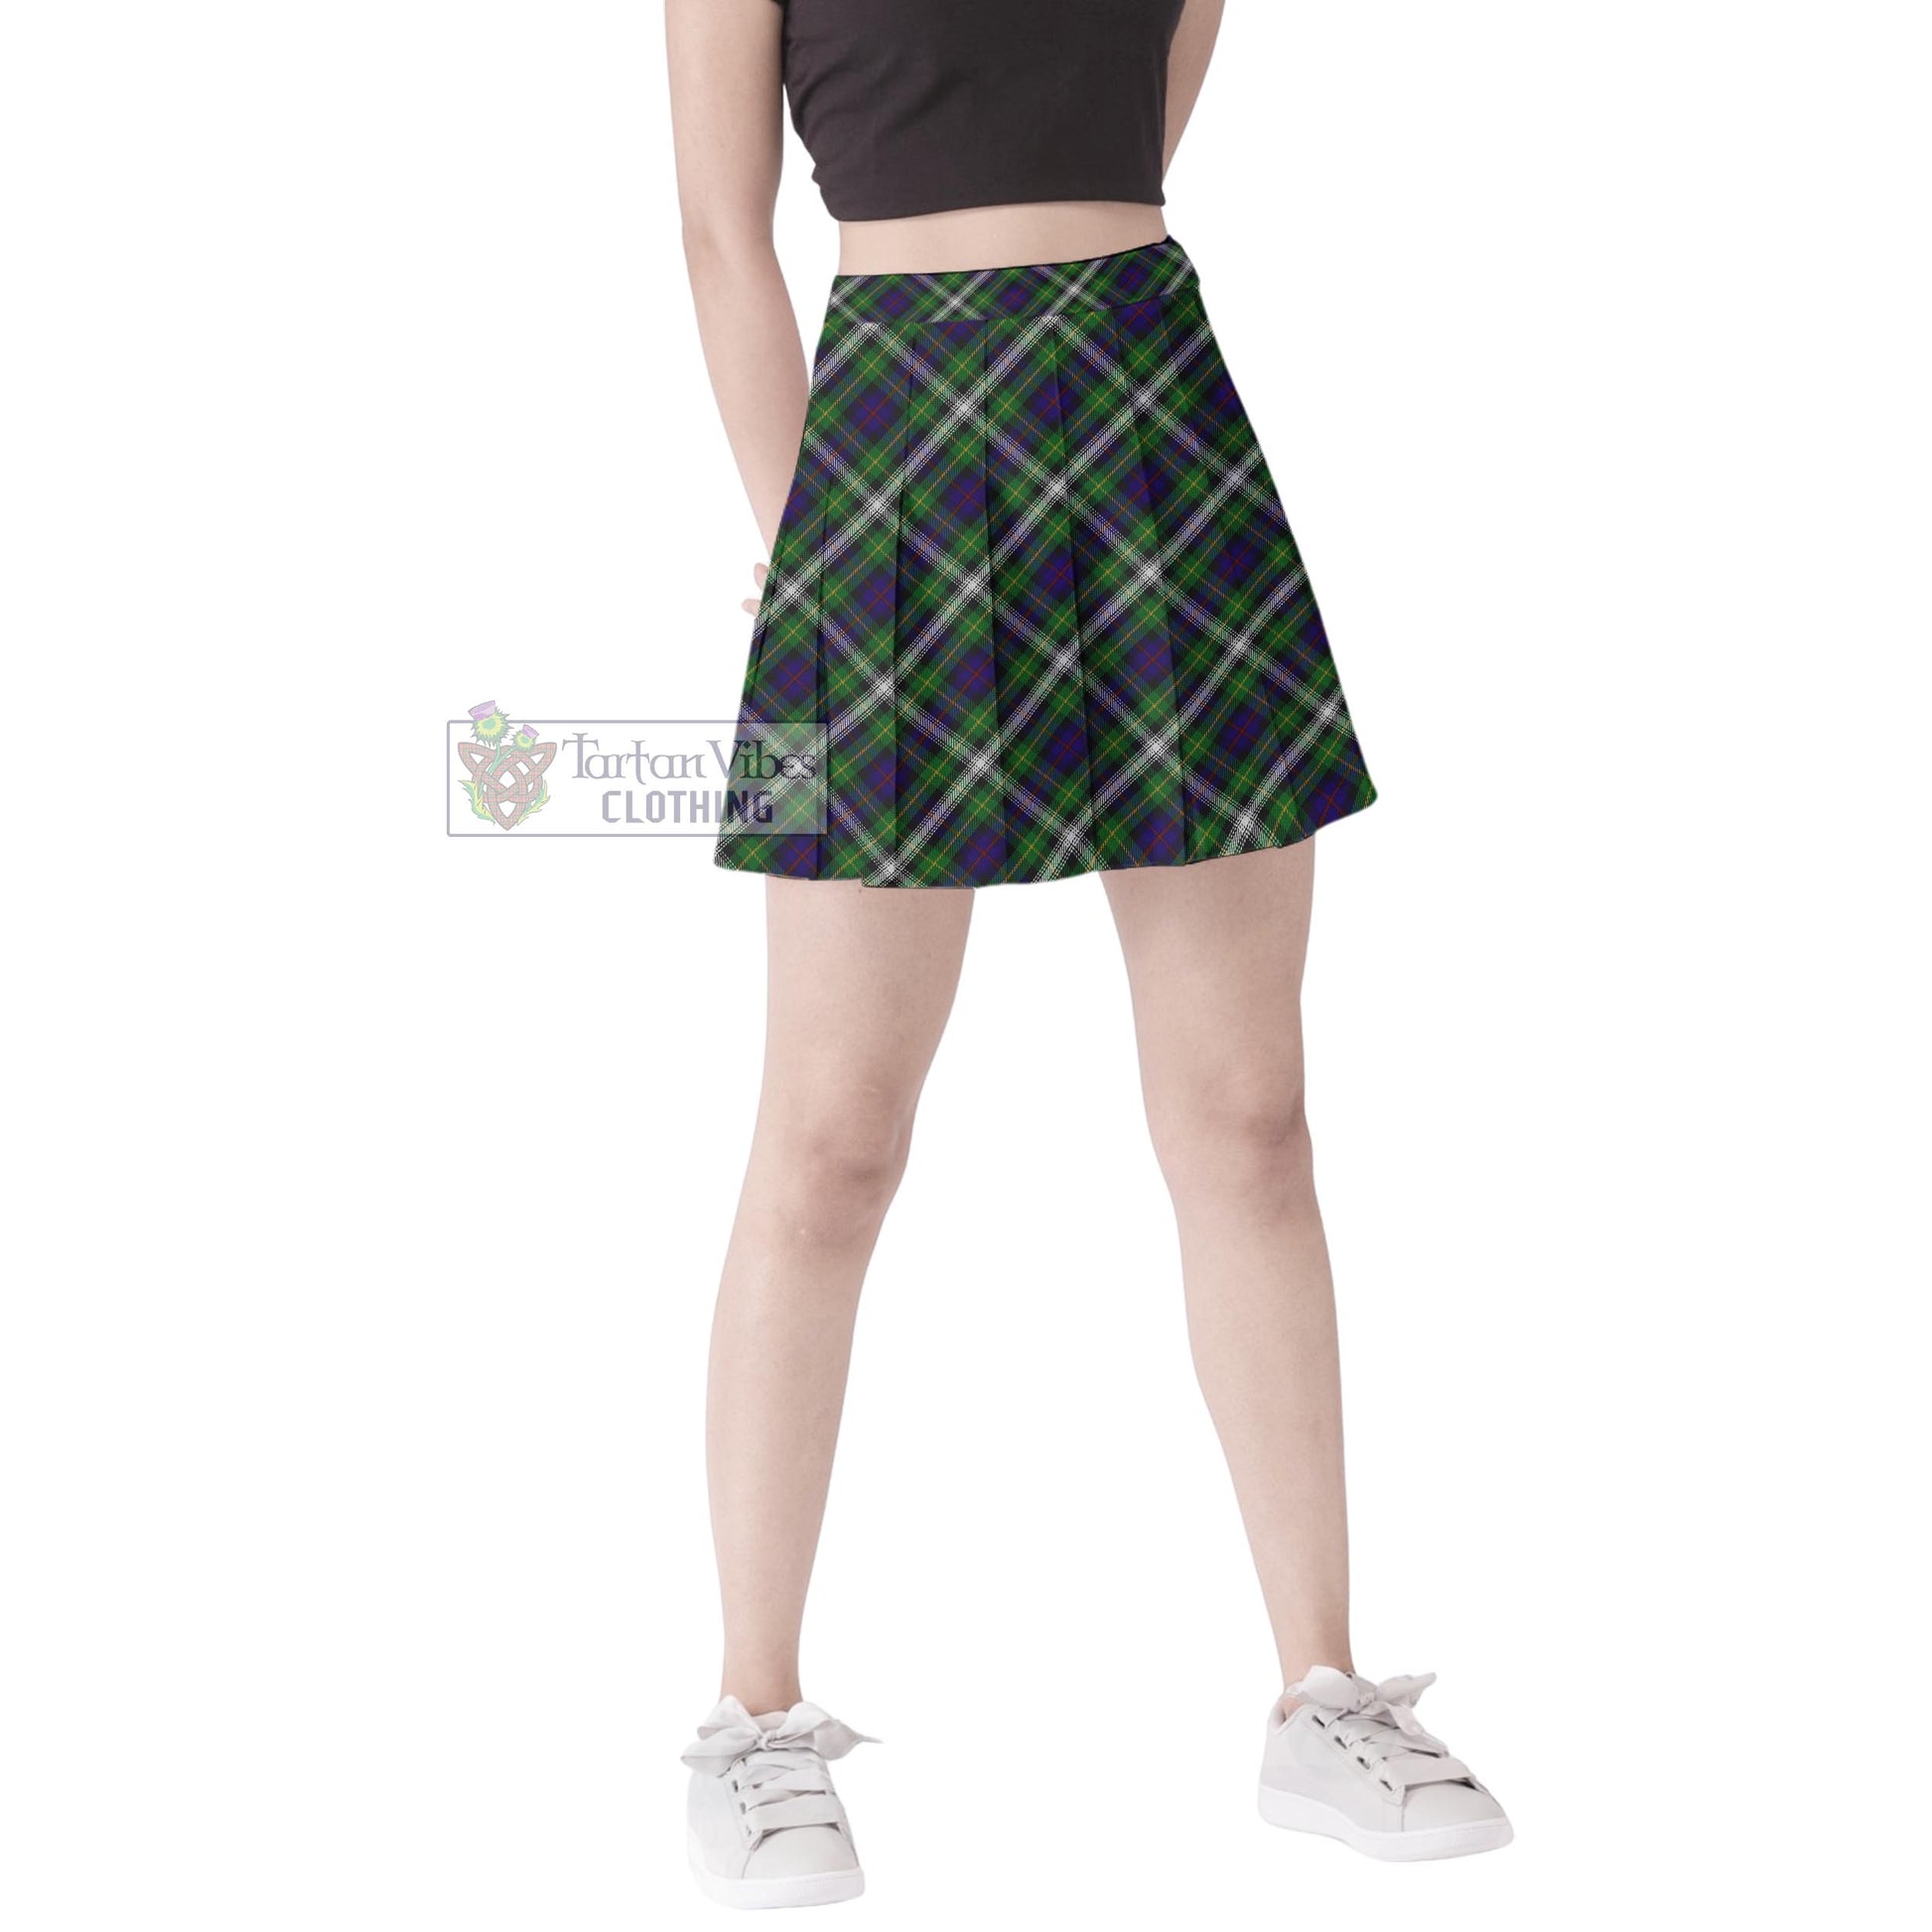 Tartan Vibes Clothing Farquharson Dress Tartan Women's Plated Mini Skirt